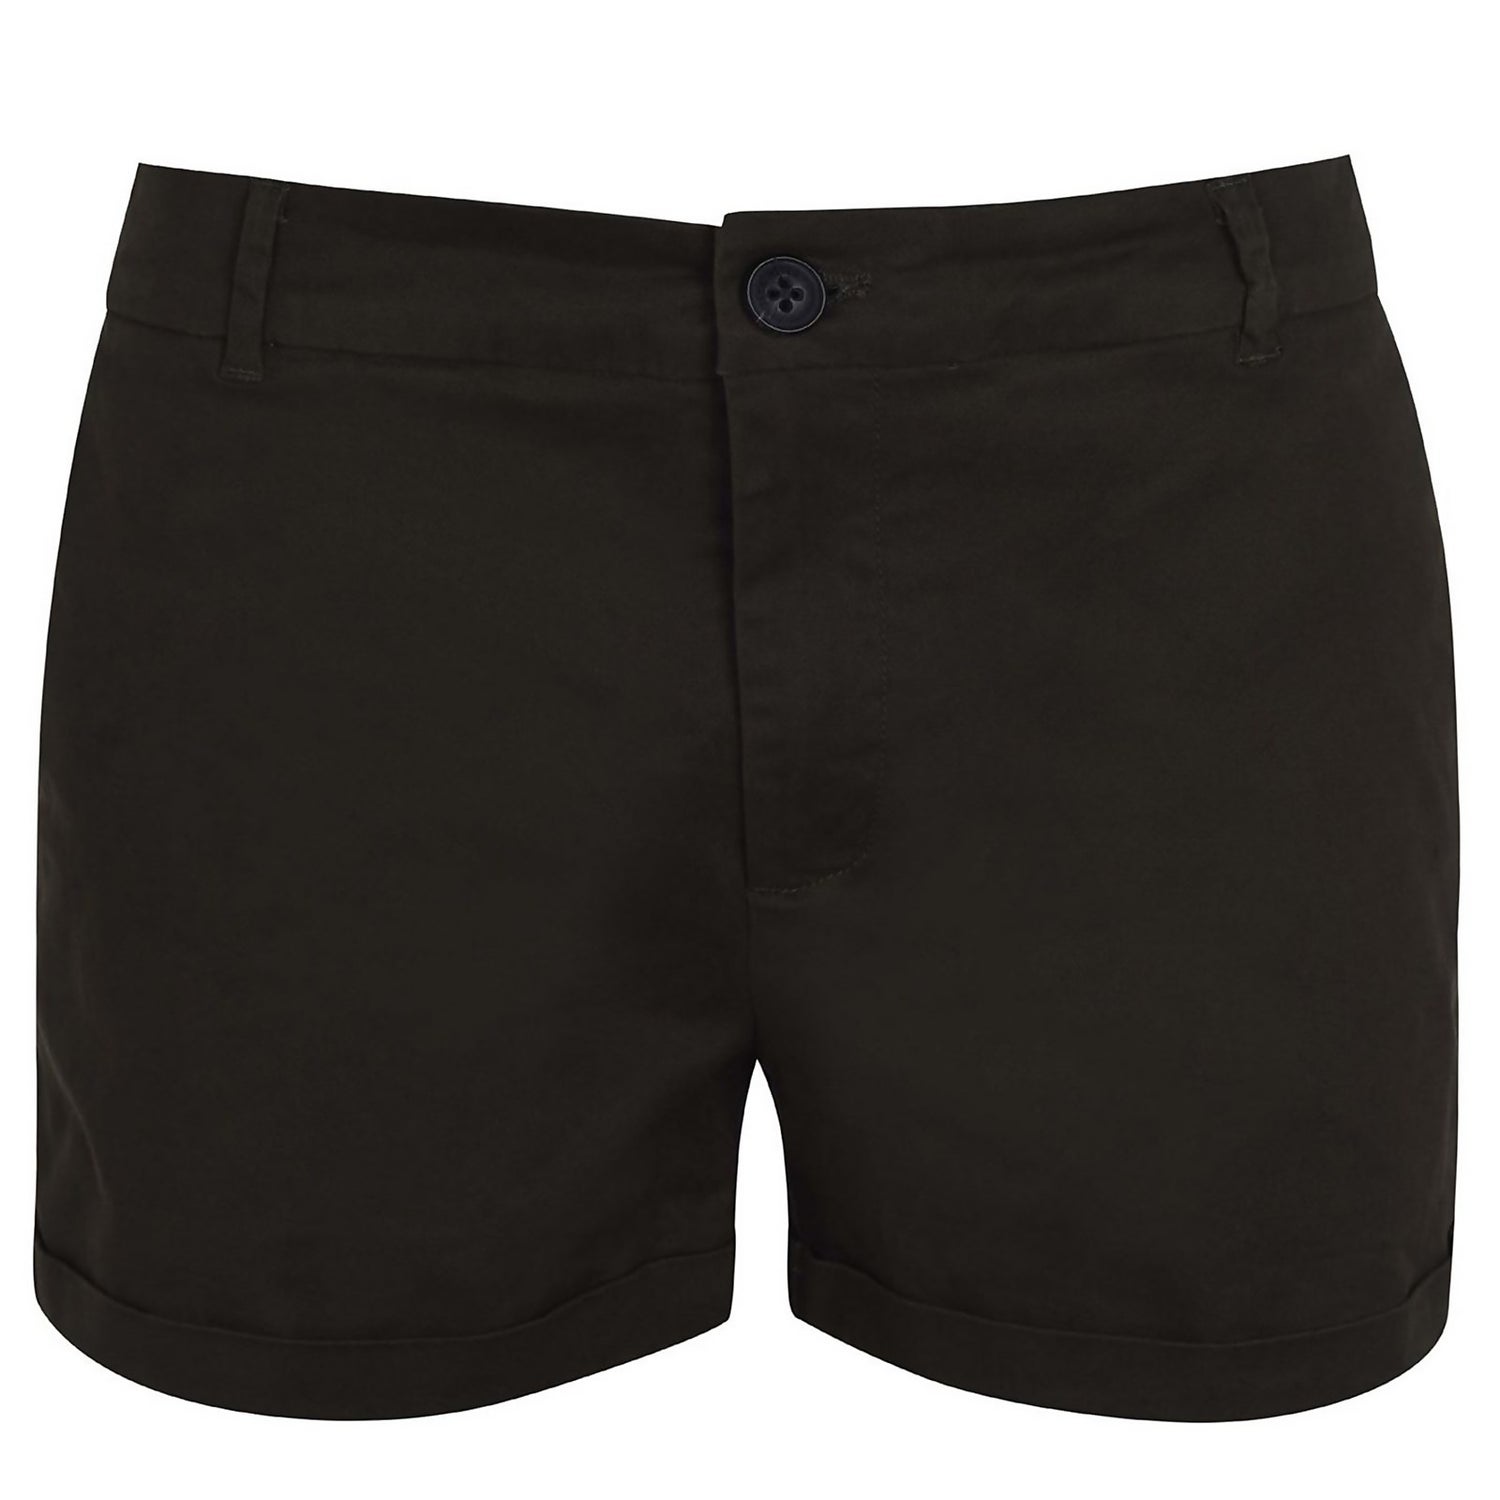 Iggleby Chino Shorts - Khaki